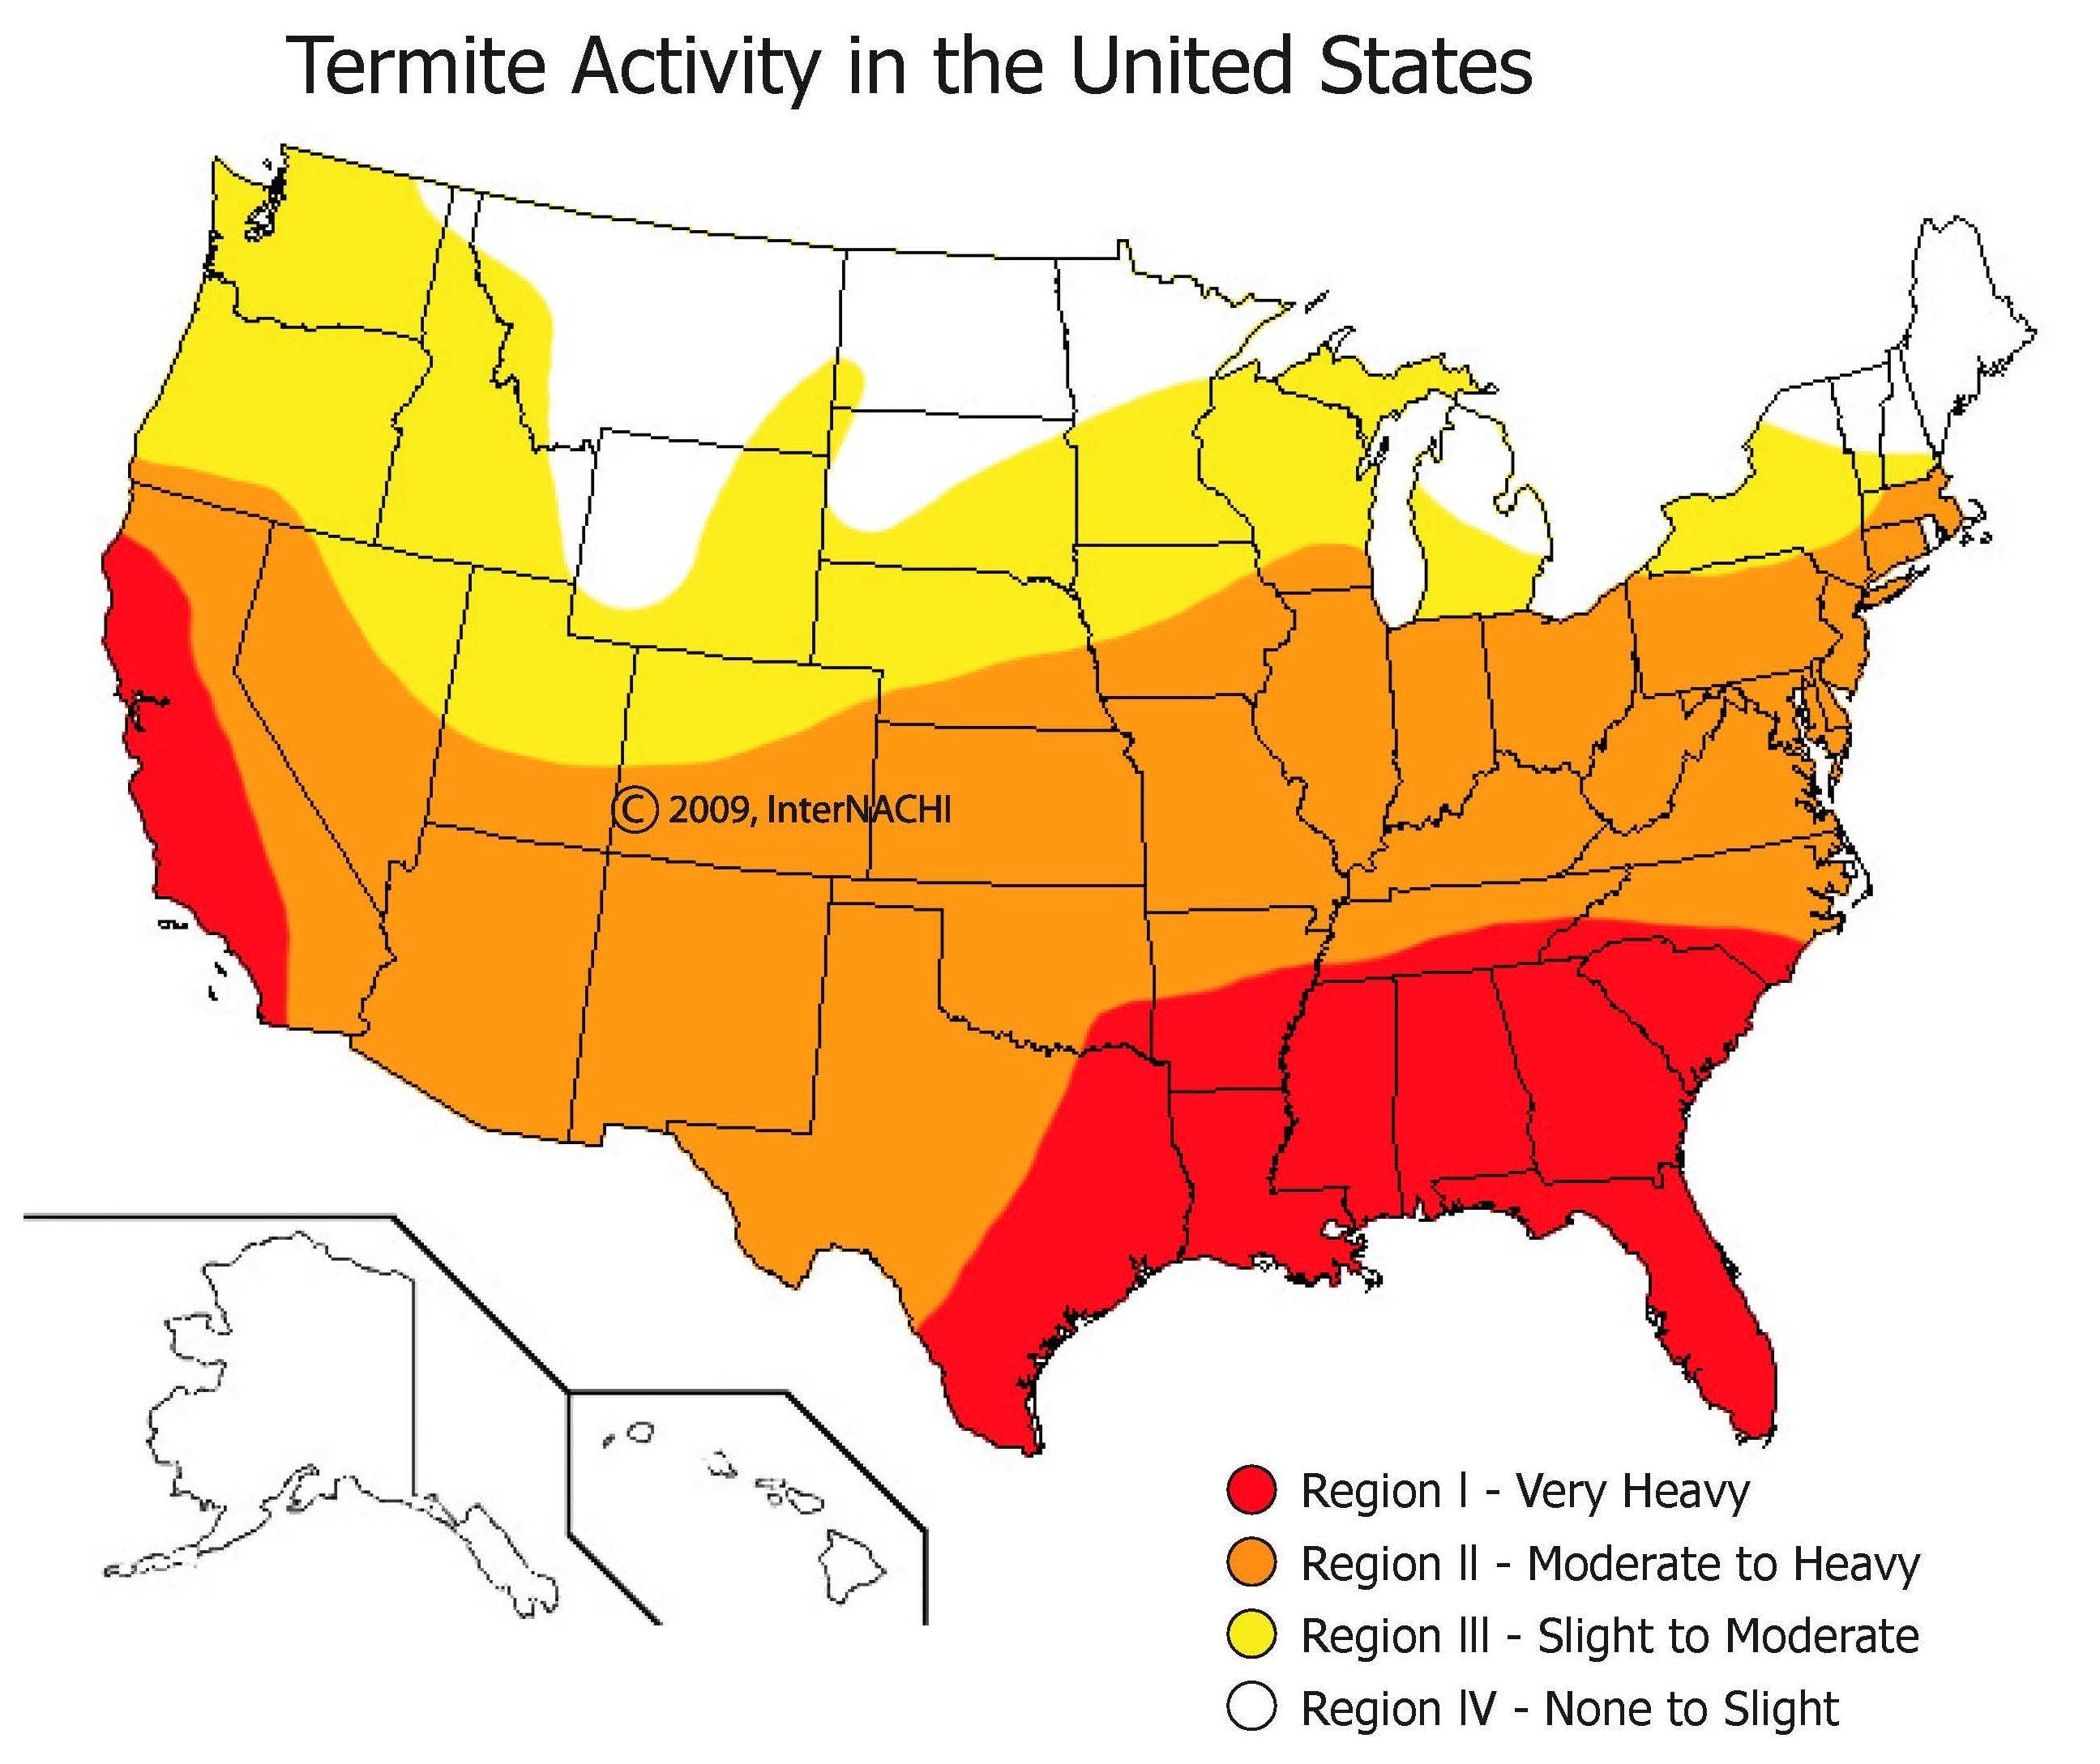 Termite activity in the U.S.